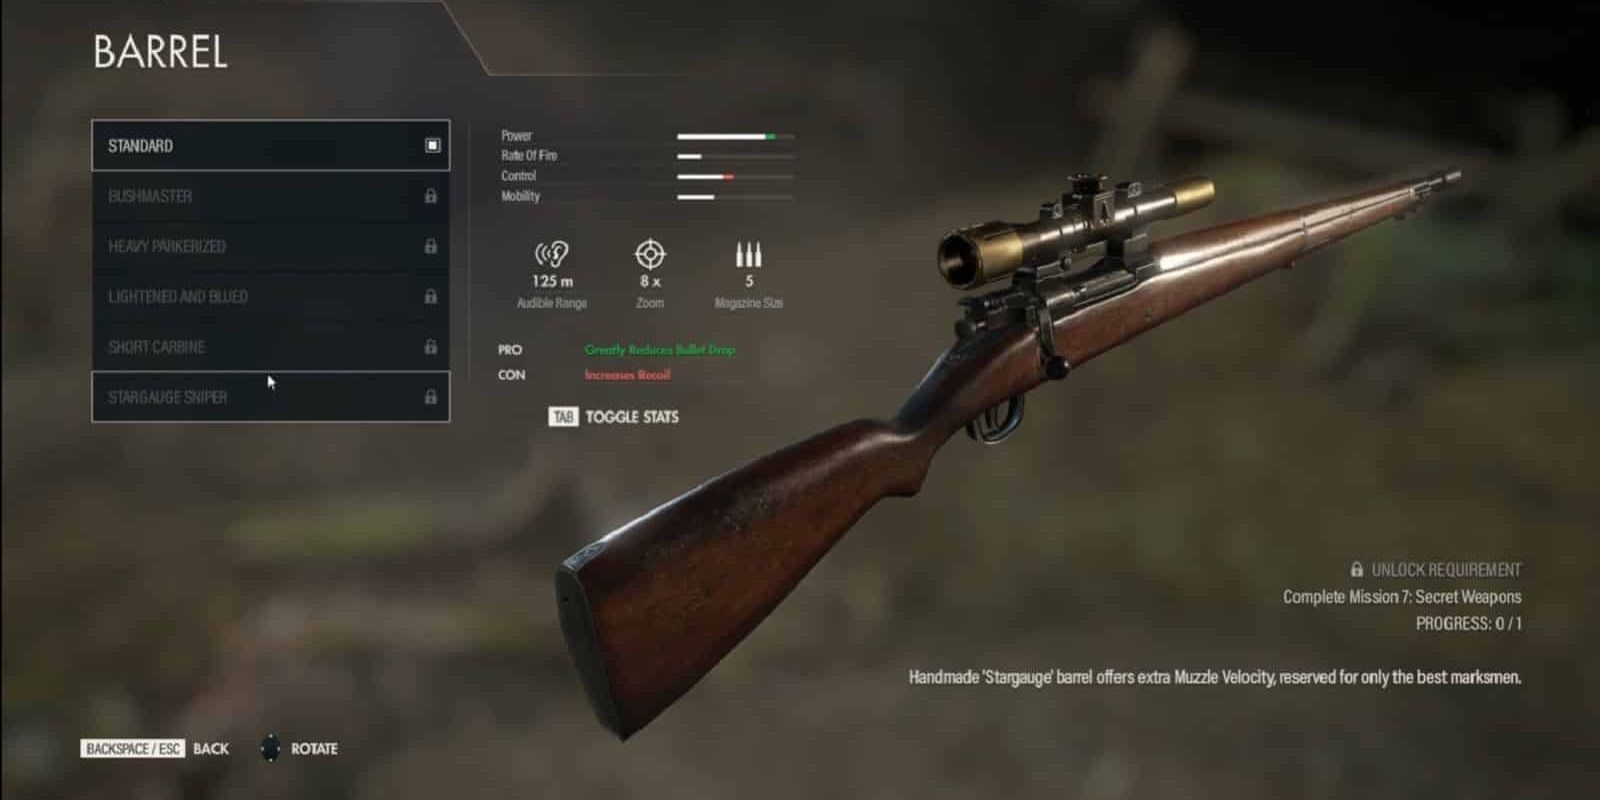 Sniper Elite 5 Weapon Customization showing various customization options